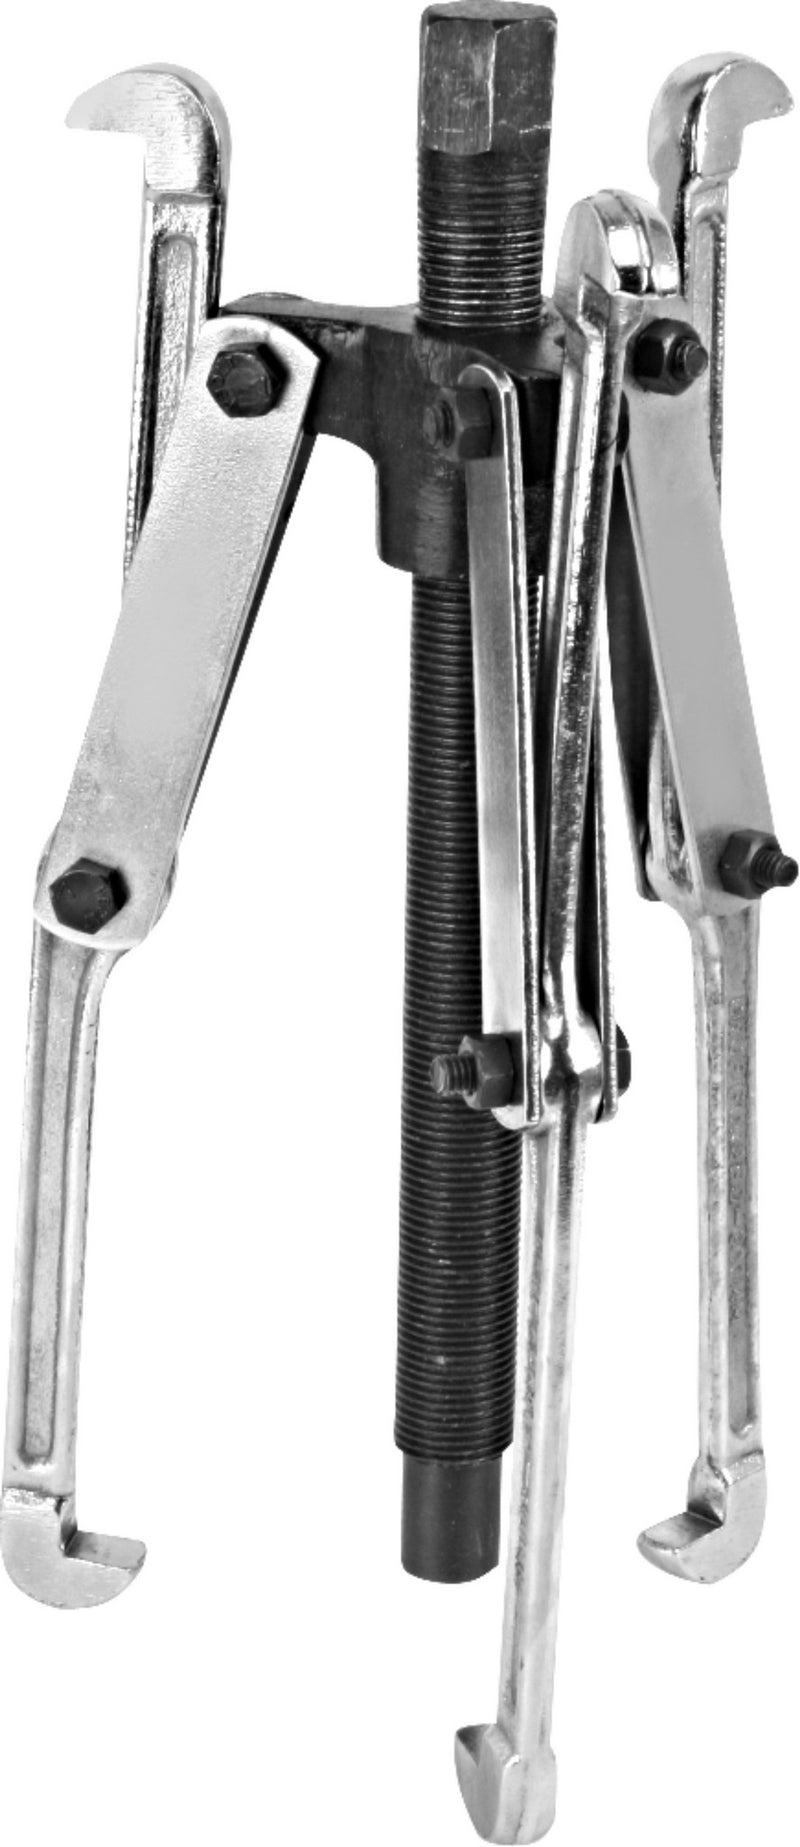 Bearing Puller 3 Legs Universal Drop Forged Steel - Apex Code 501